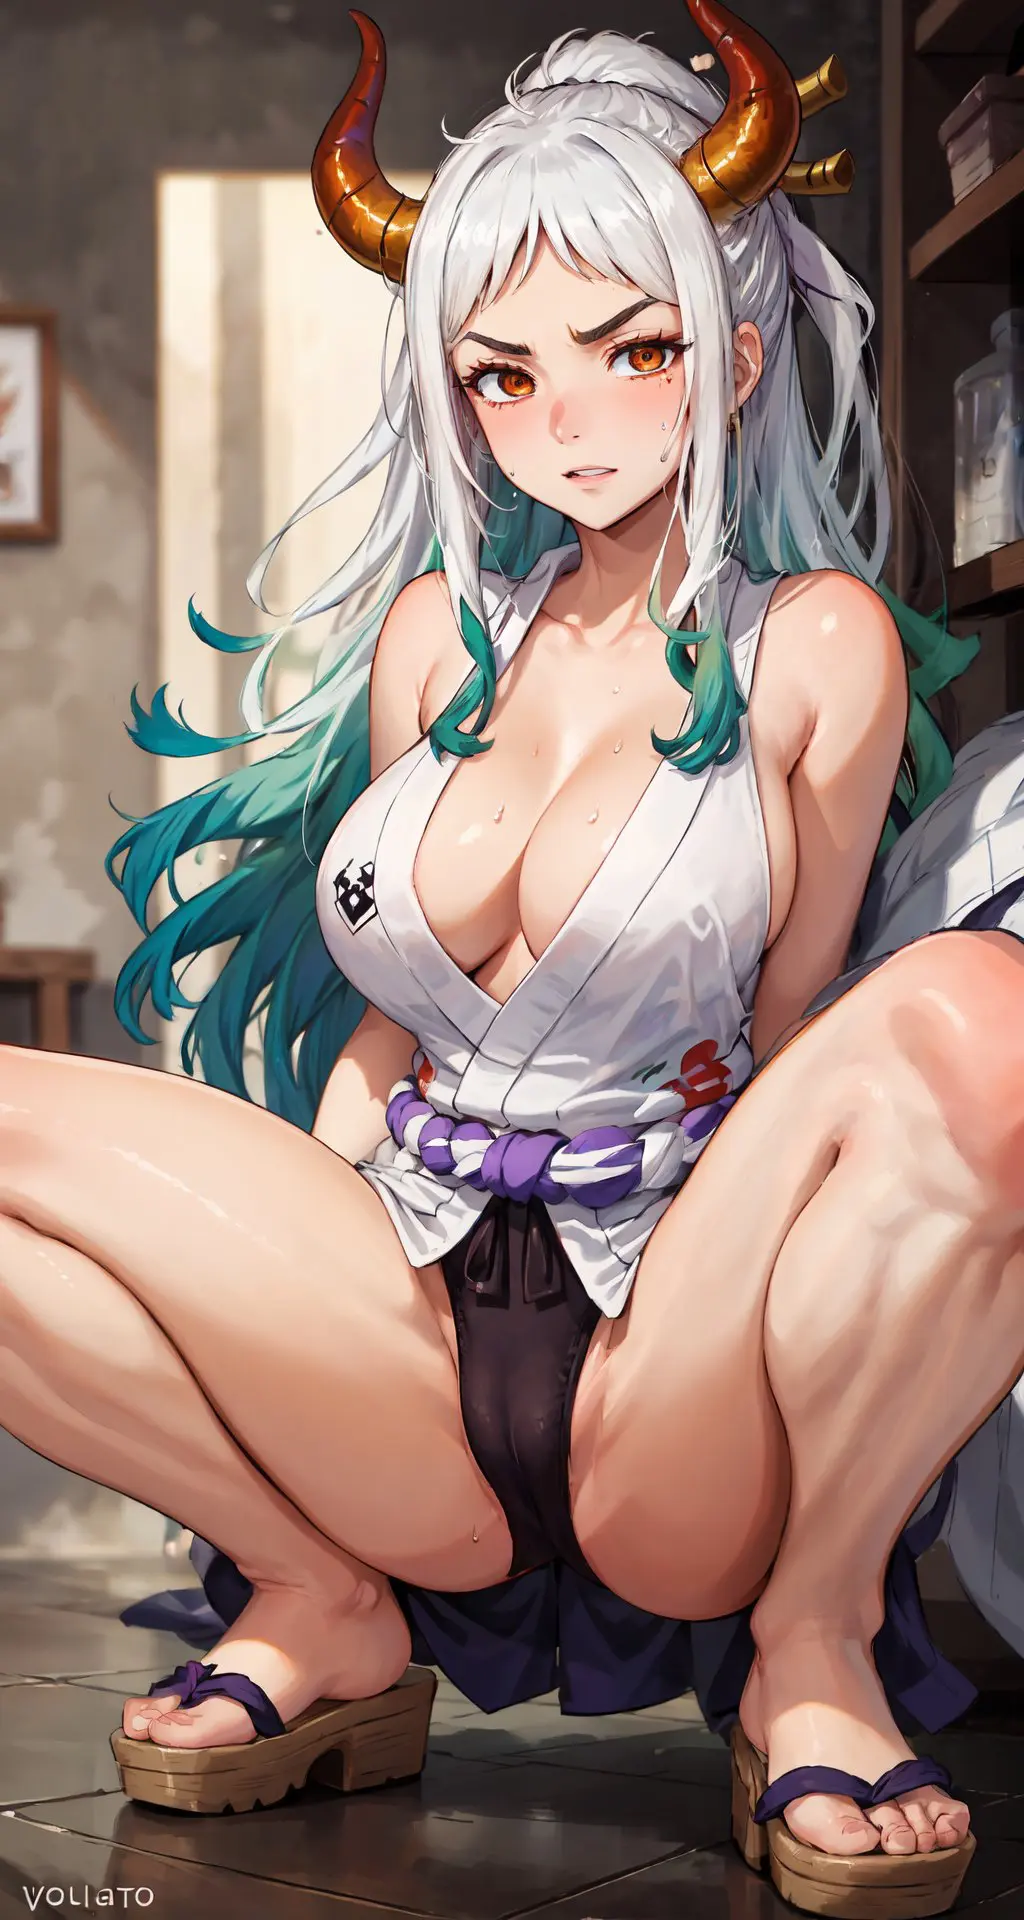 Profile of Yamato submissive